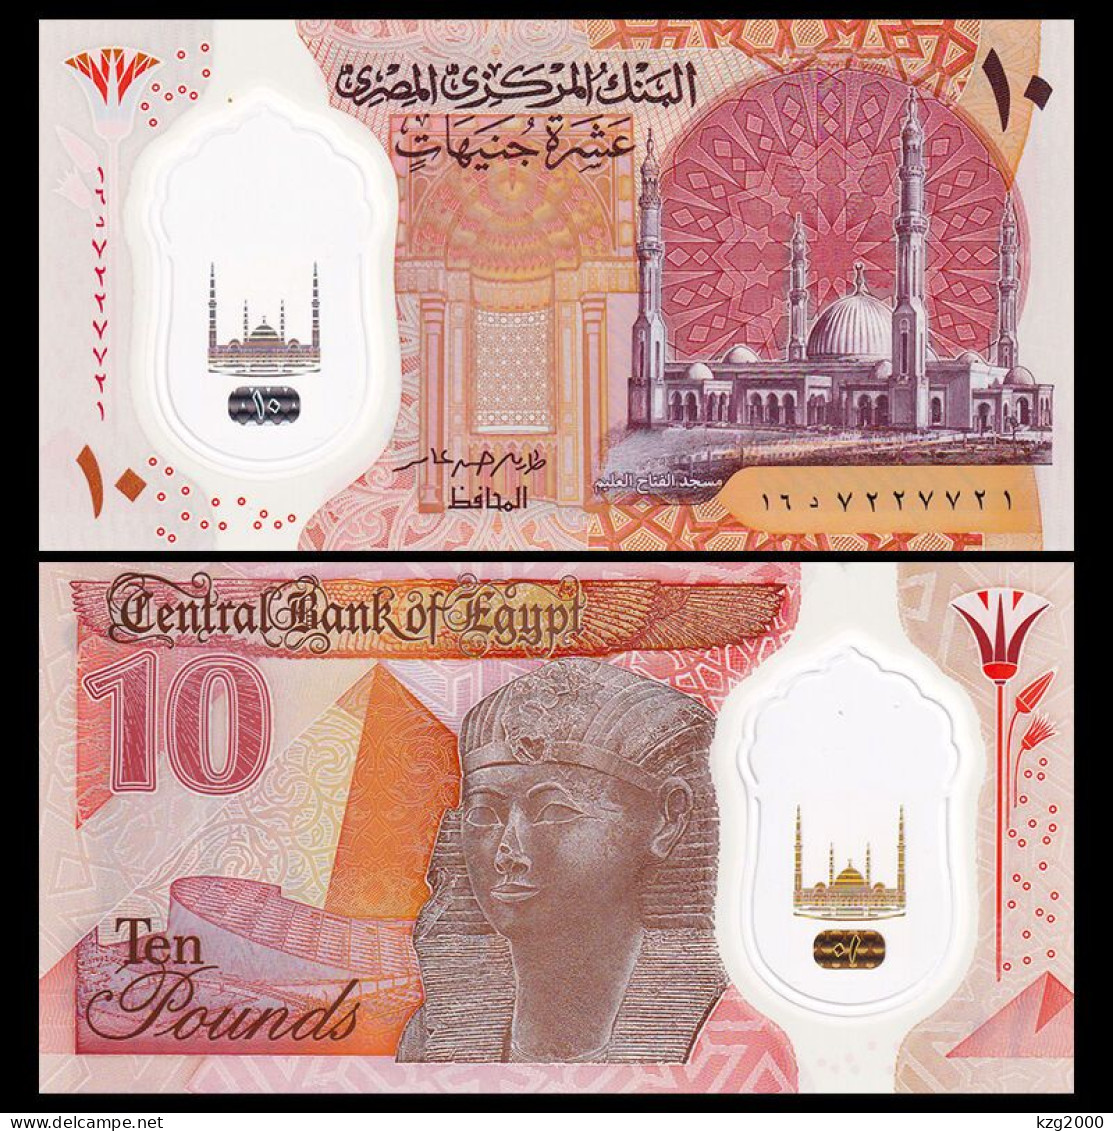 Egypt   2022  Plastic Banknotes Paper Money 10 Pound Polymer  UNC 1Pcs Banknote - Egypte